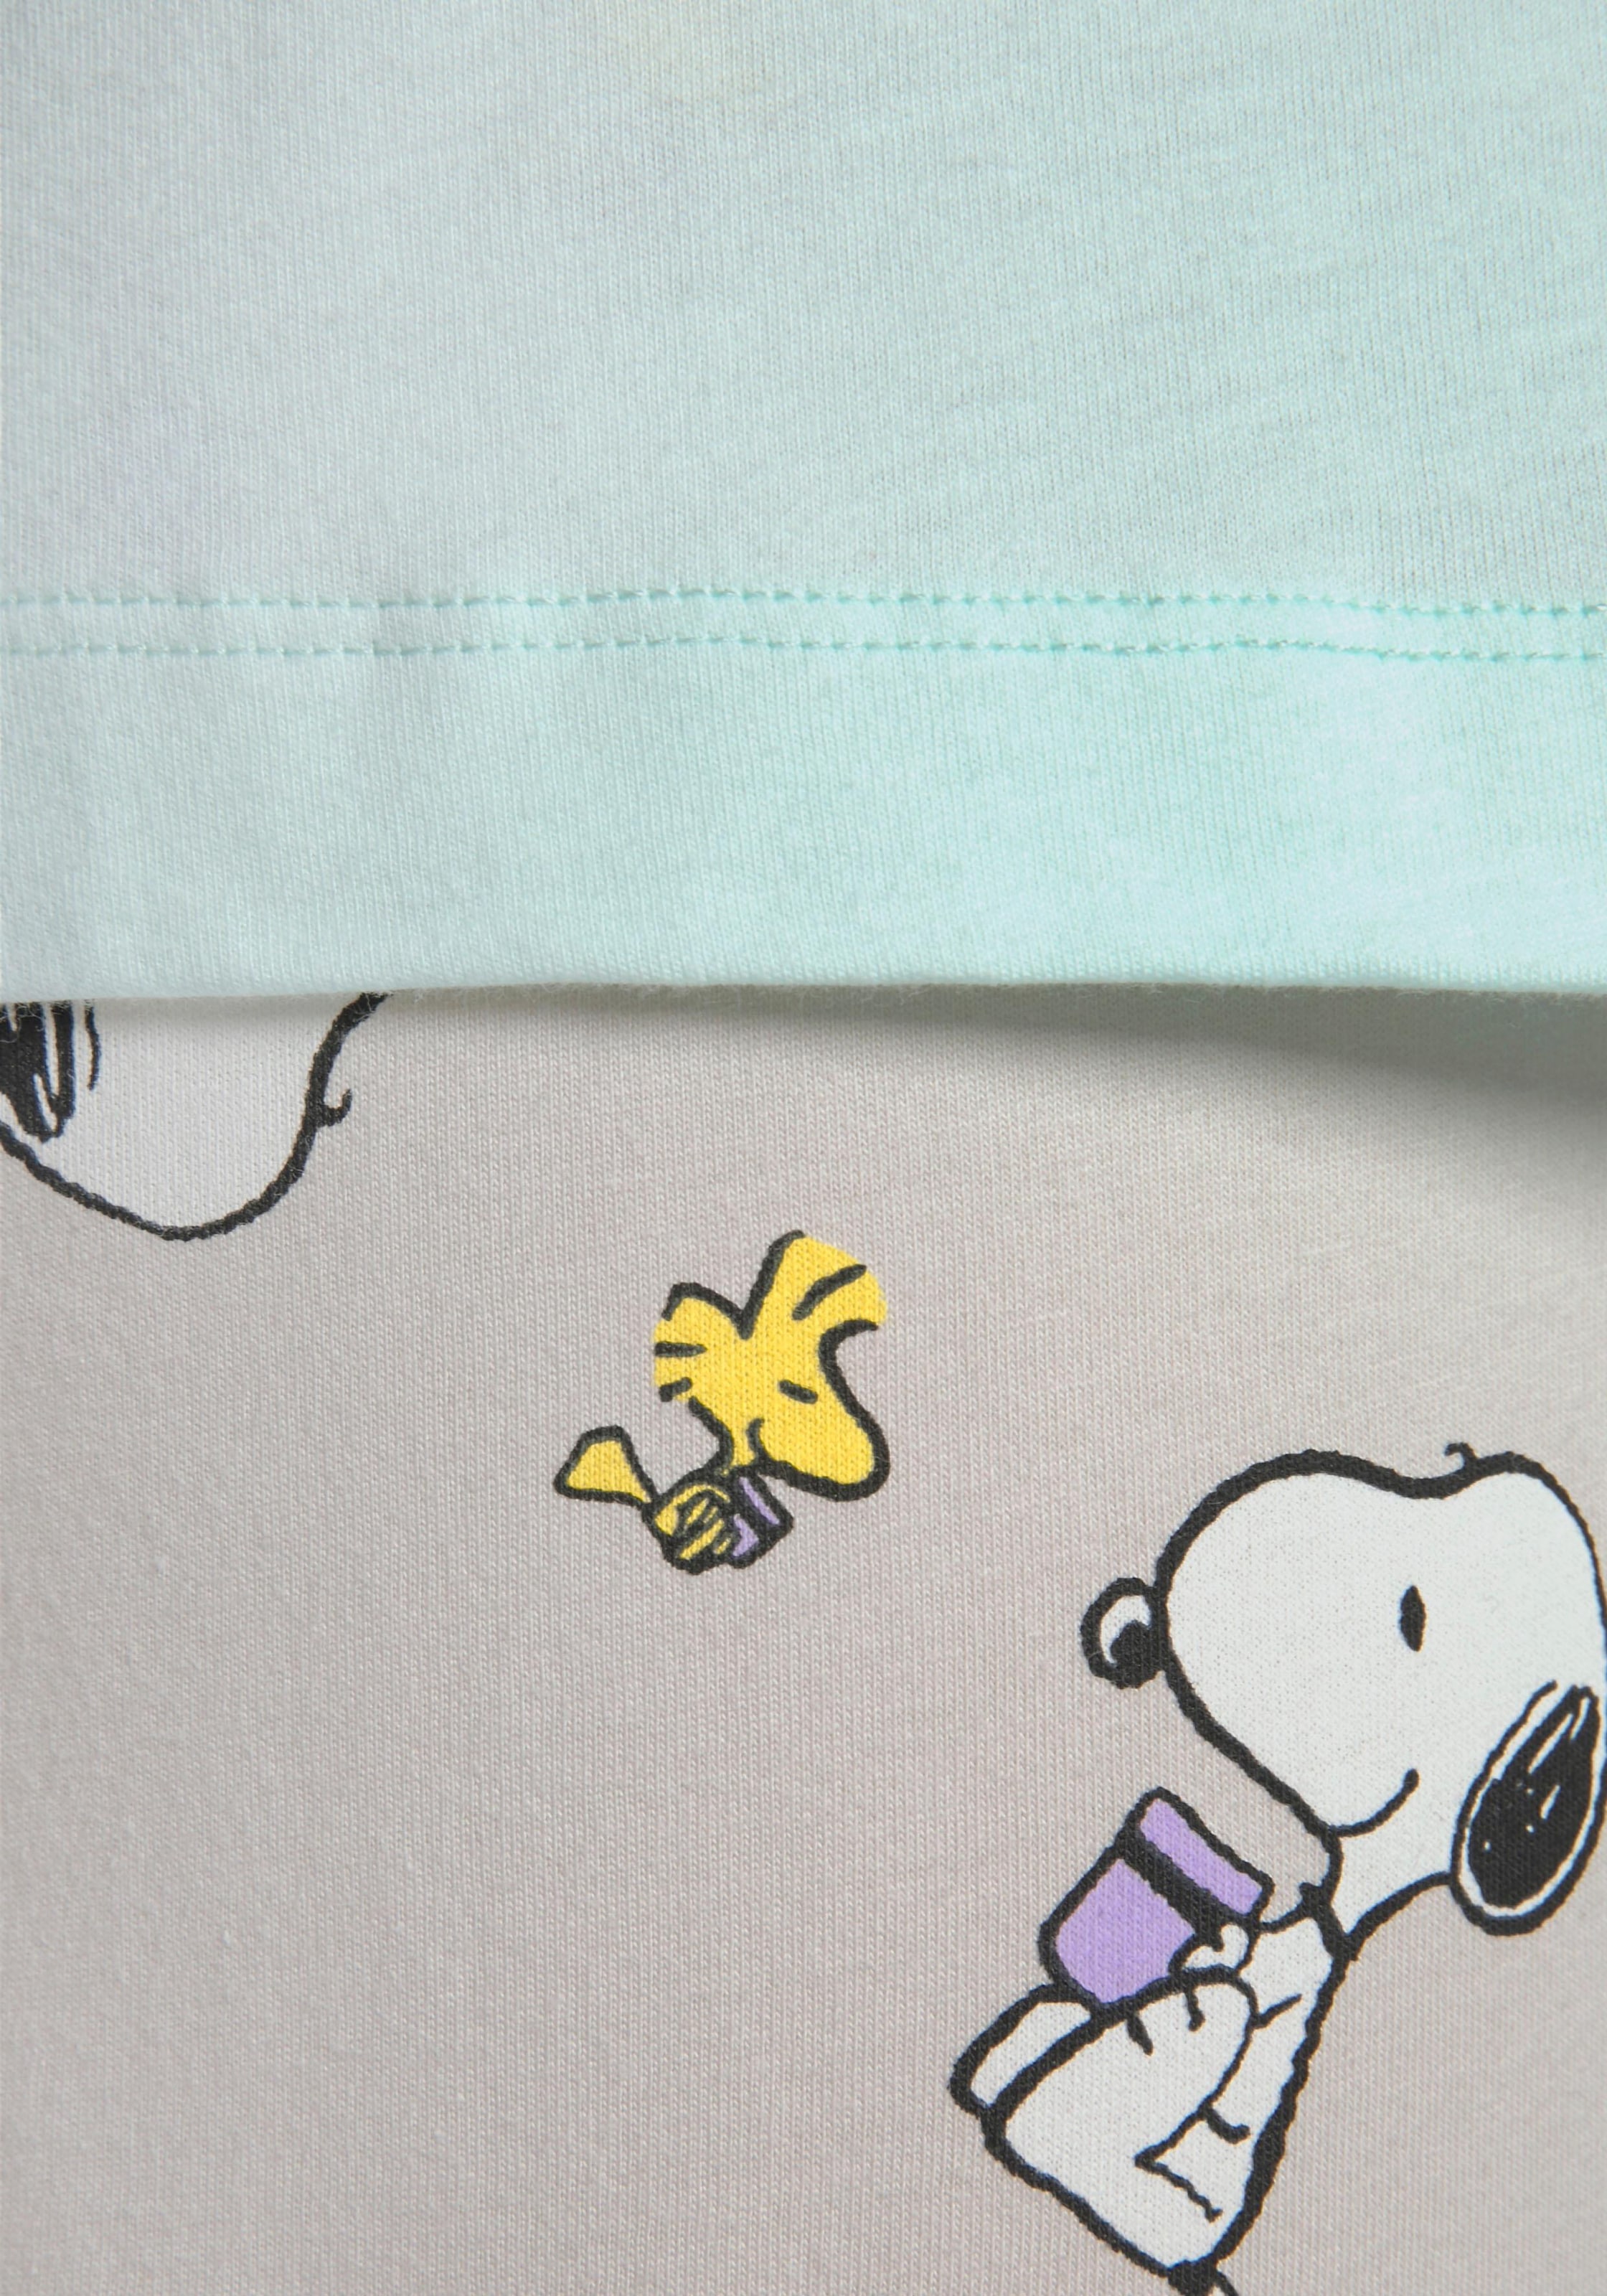 (2 Stück), Peanuts Woodstock Druck Trouver Pyjama, und mit Snoopy sur tlg., 1